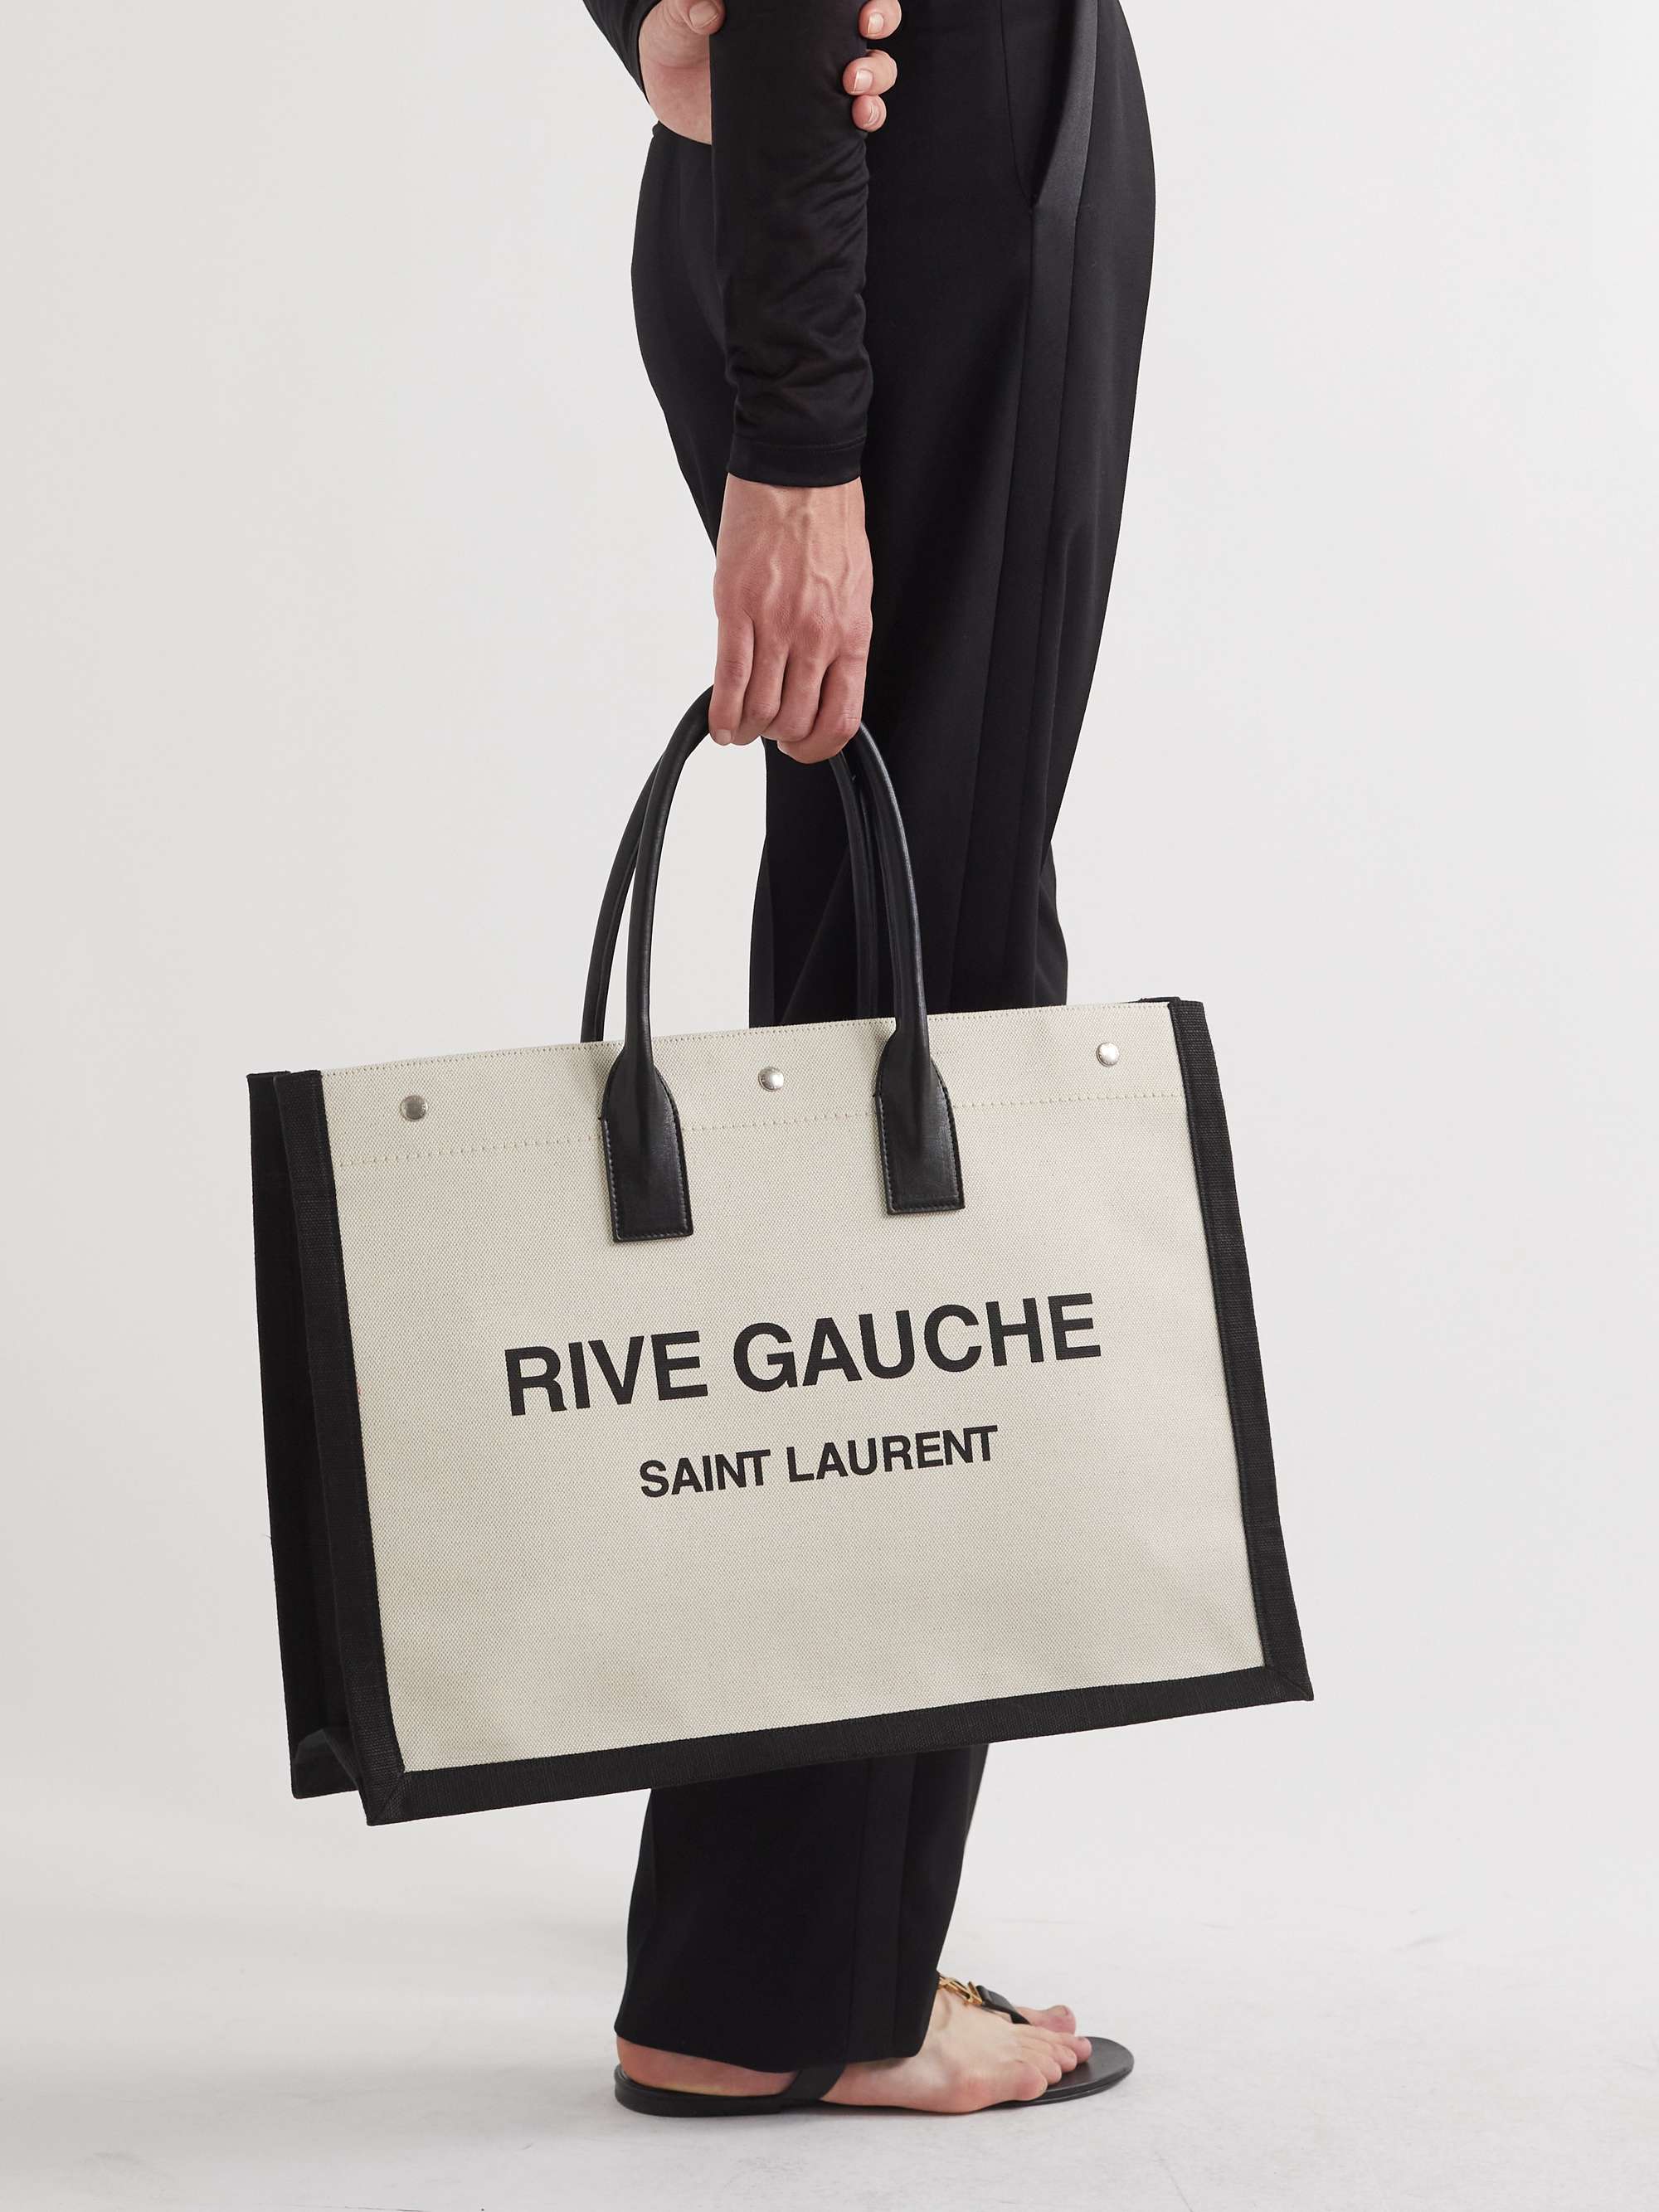 Saint Laurent Rive Gauche Leather-trimmed Printed Canvas Tote